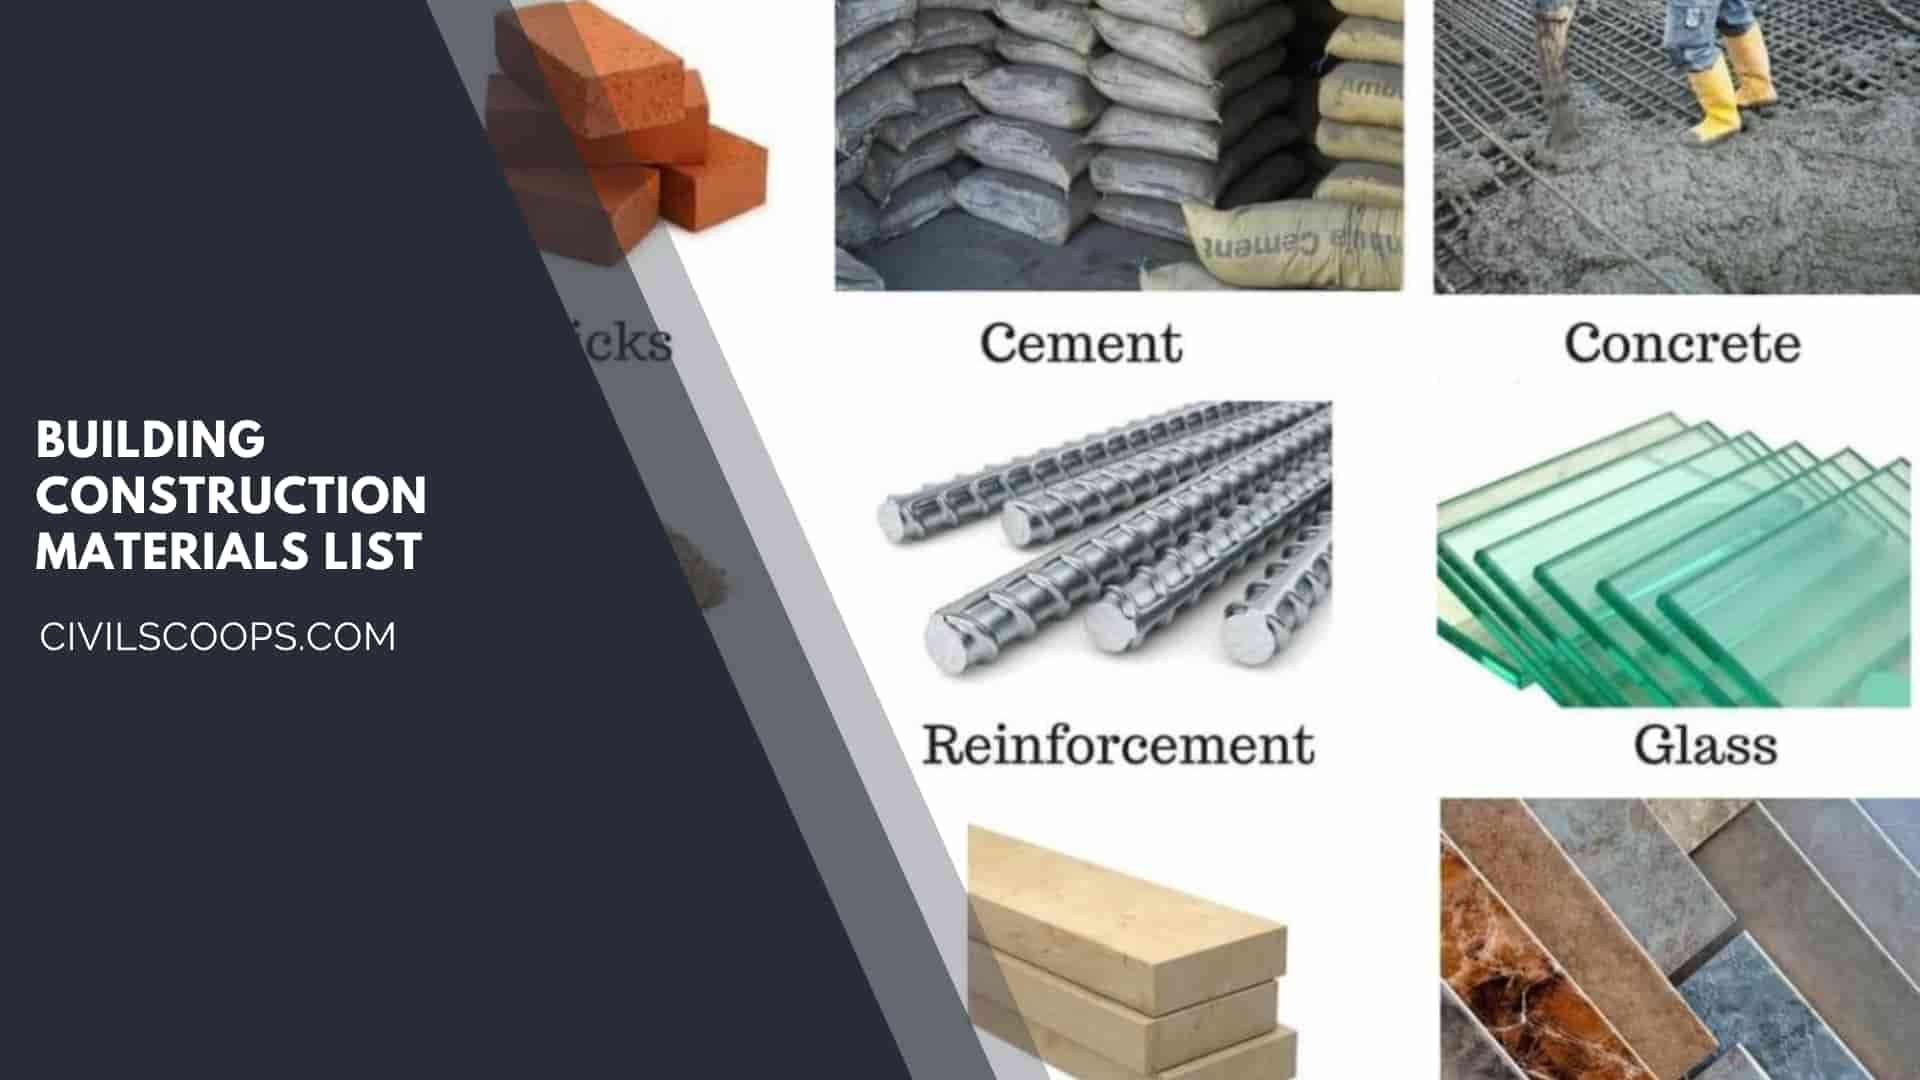 Building Construction Materials List